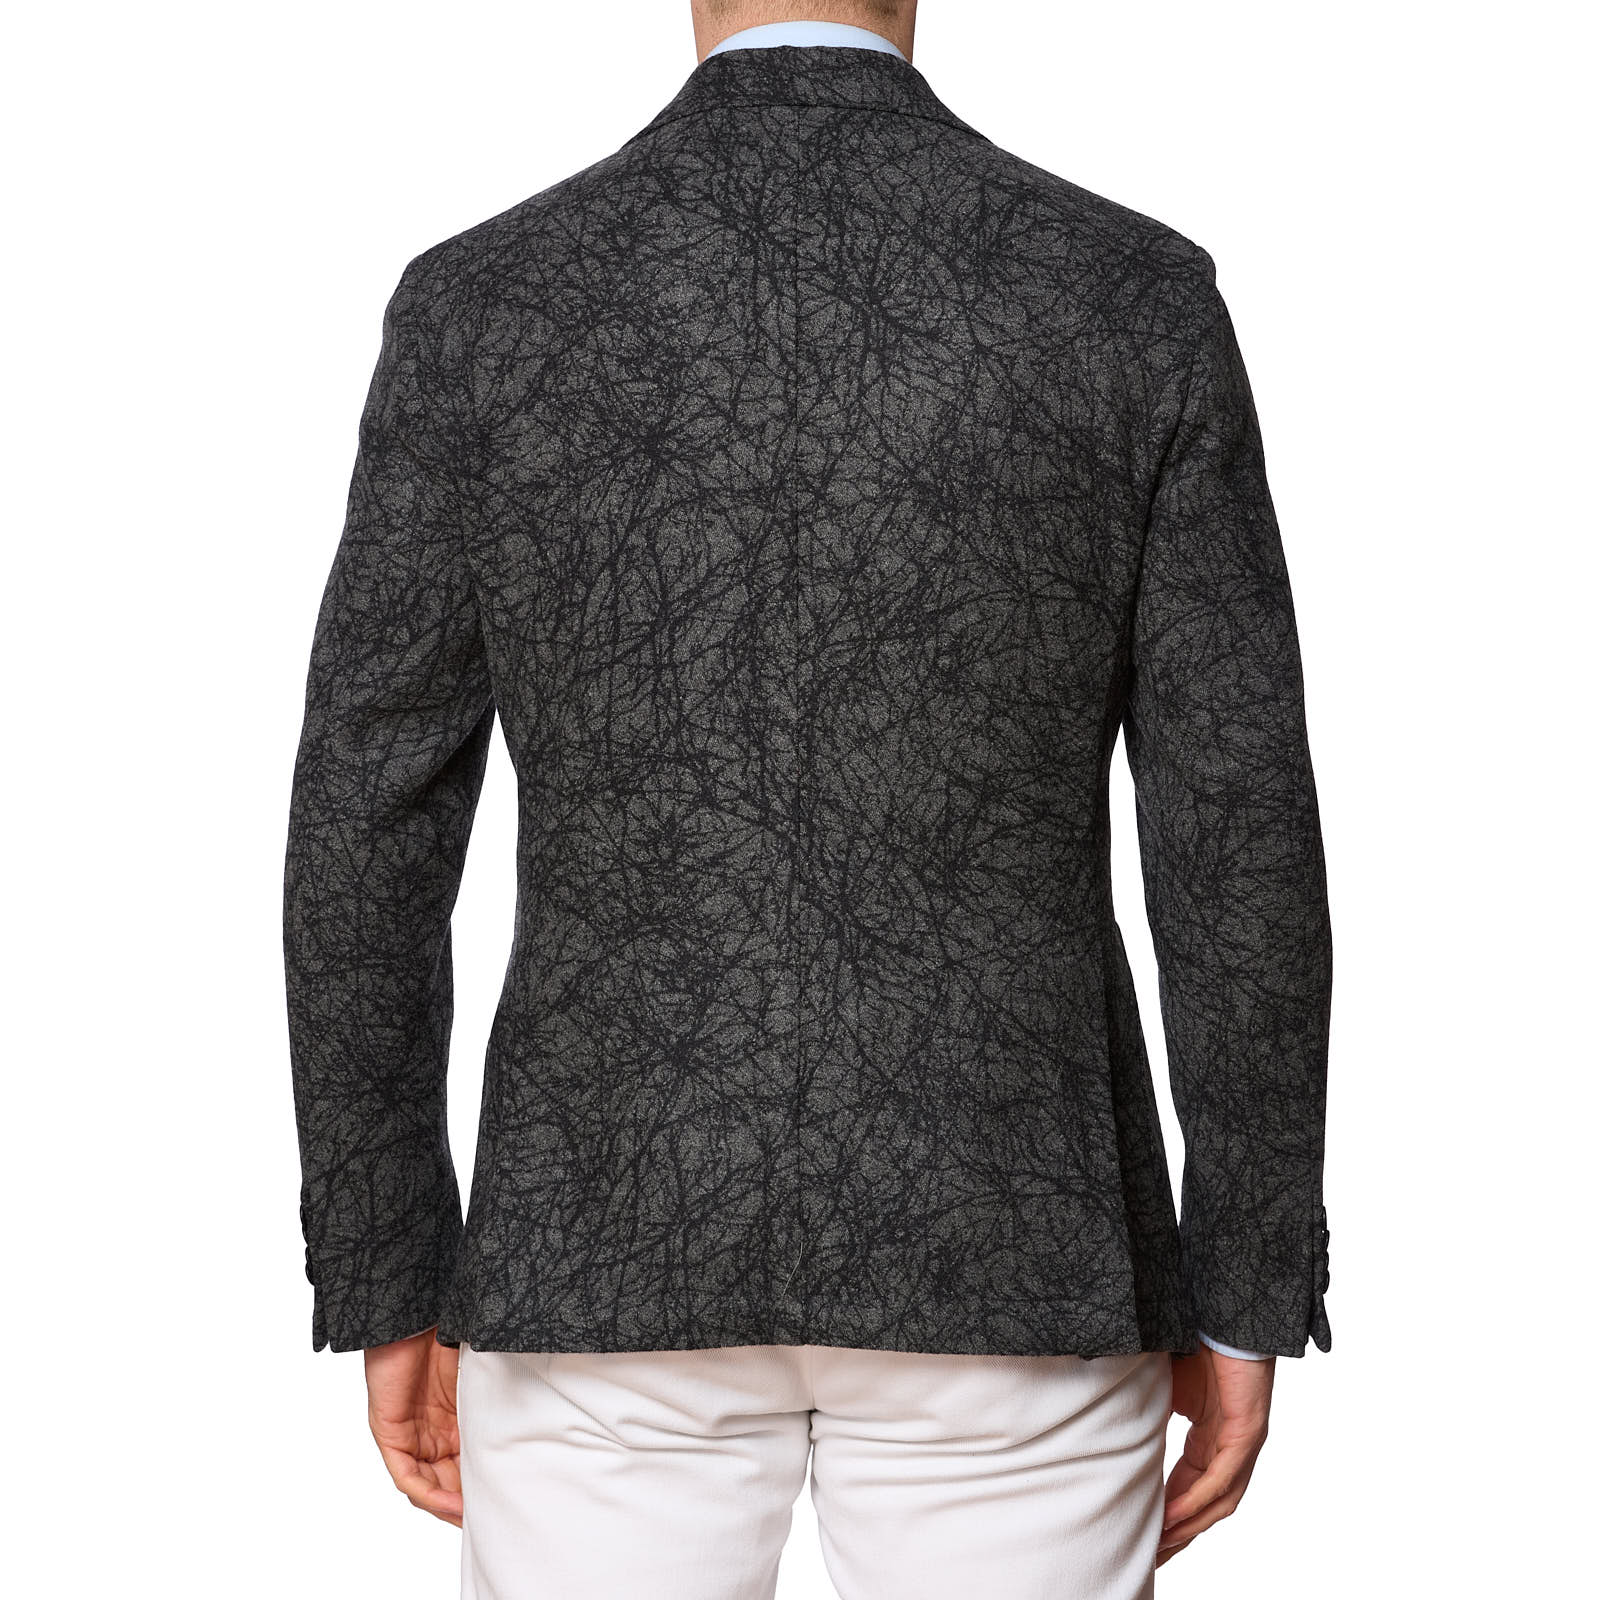 SARTORIA PARTENOPEA Gray Fancy Wool-Cashmere Jacket EU 50 NEW US 40  Current Model